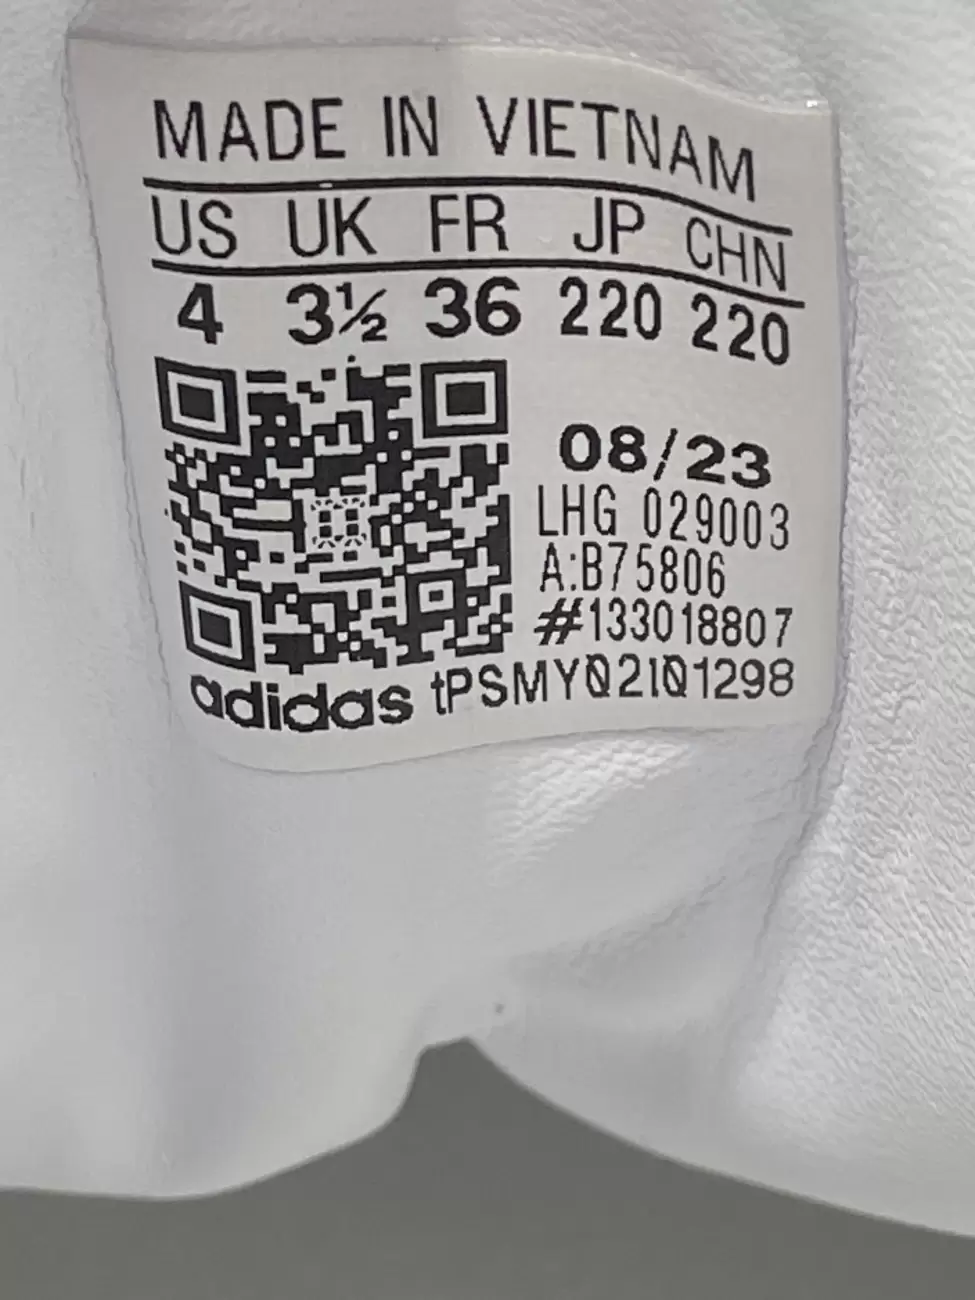 41743 - Adidas Samba OG Cloud White Core Black | Item Details - AfterMarket